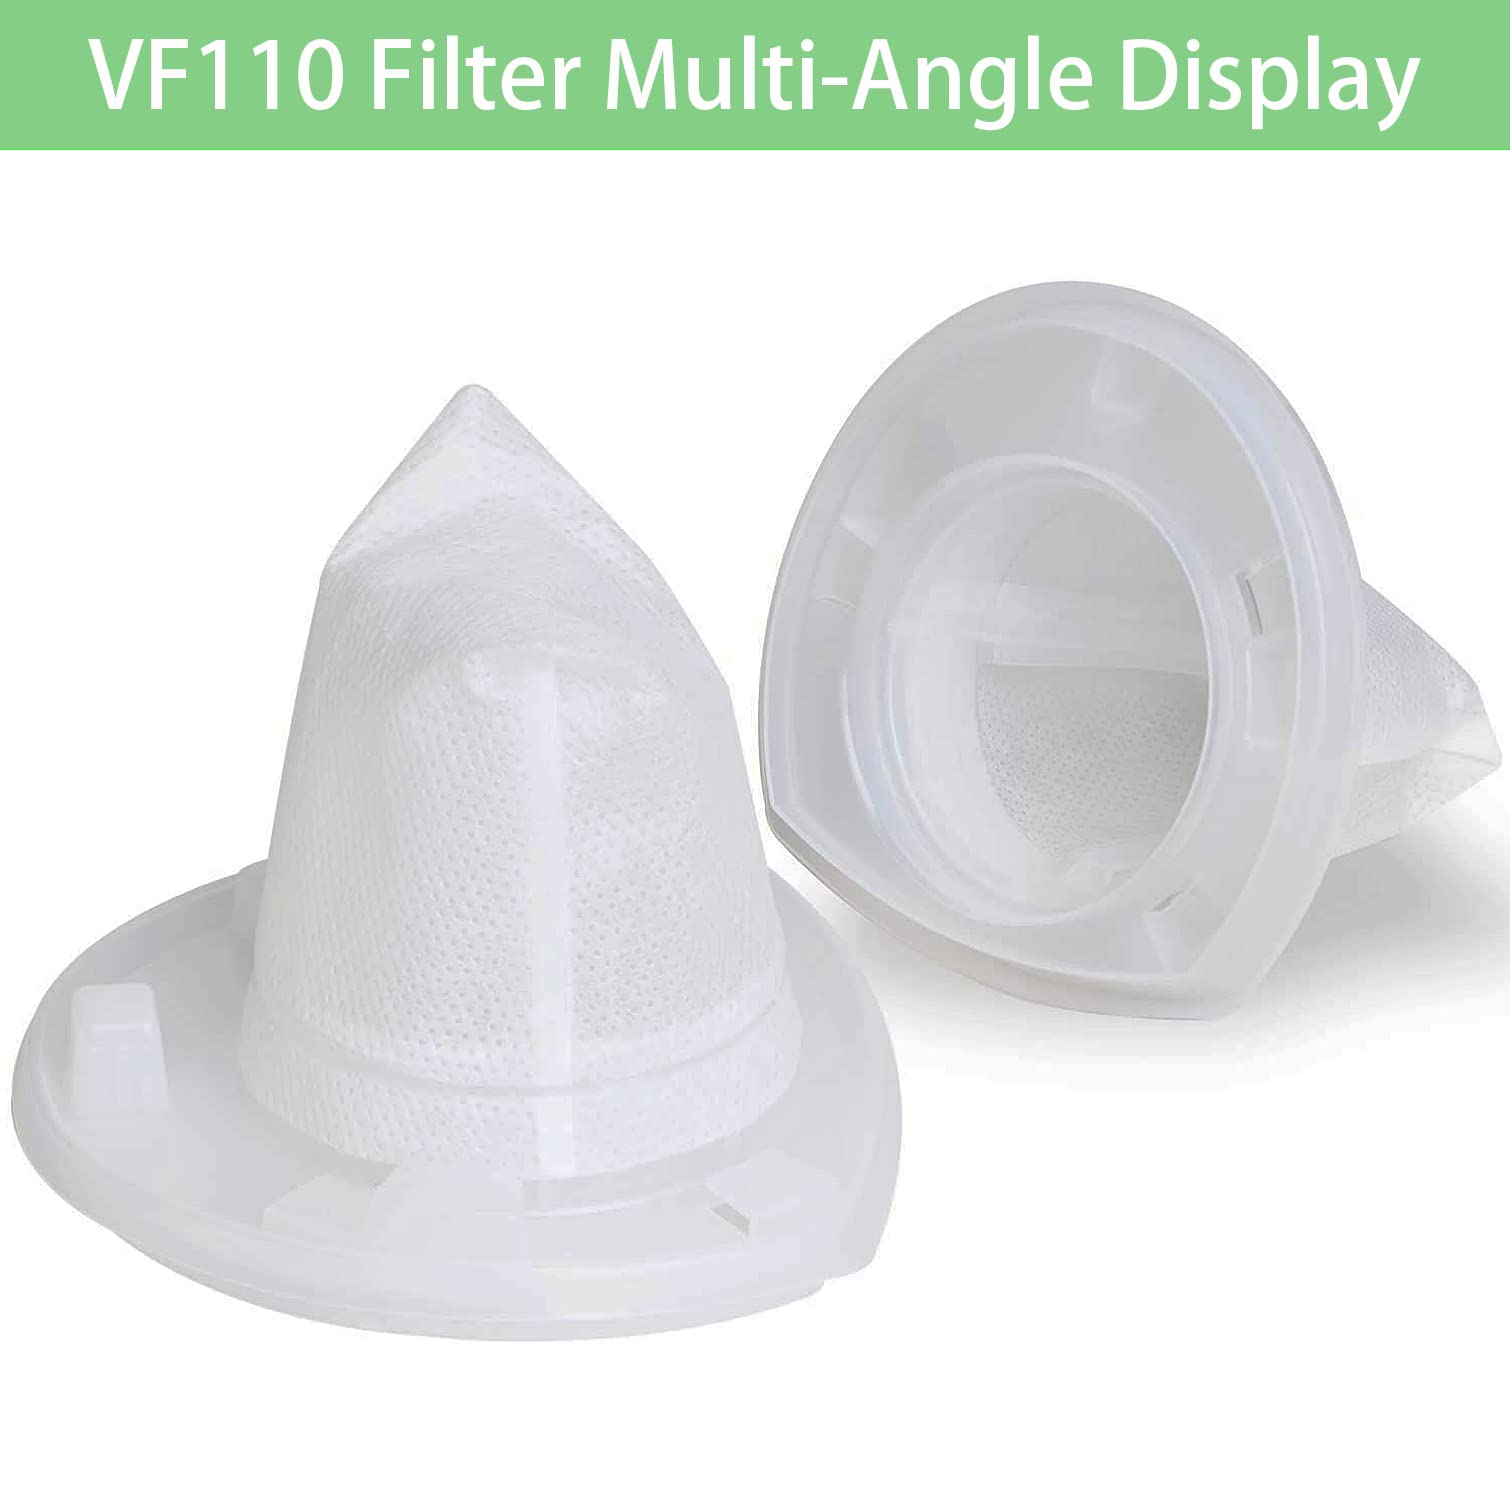 VF110 Filter, 6 Pack Replacement Vacuum Filters for Black & Decker VF110 Cordless Vacuum CHV1210, CHV1410, CHV1410B, CHV1410L, CHV1410L32, CHV1510, CHV9610, BDH2000L, 90558113-01